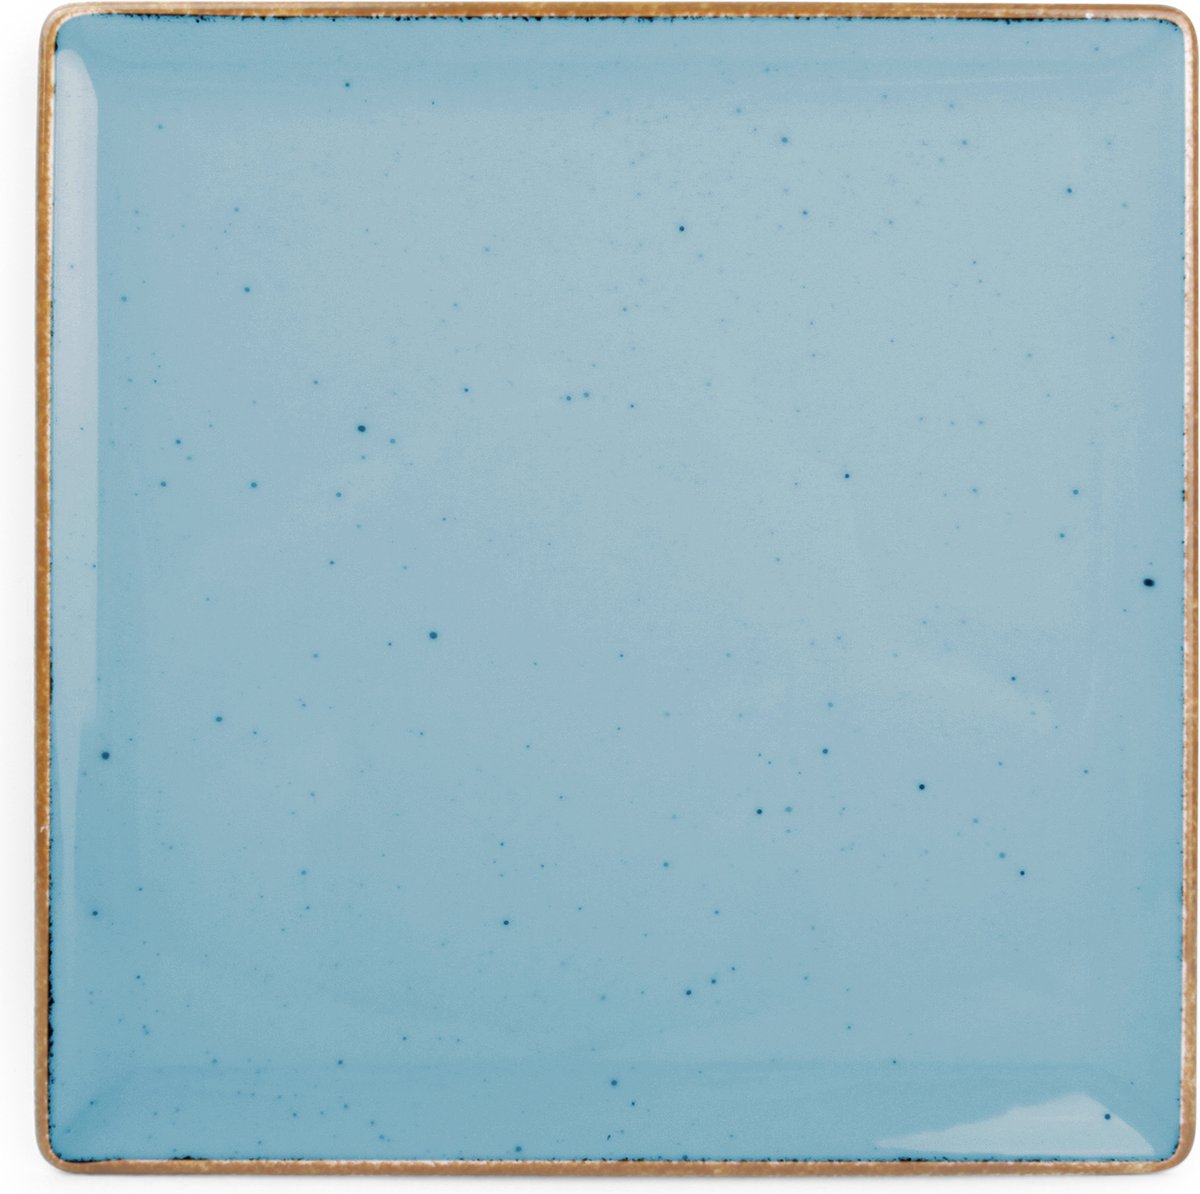 BonBistro Plat bord 20,5x20,5cm blauw Collect (Set van 6)